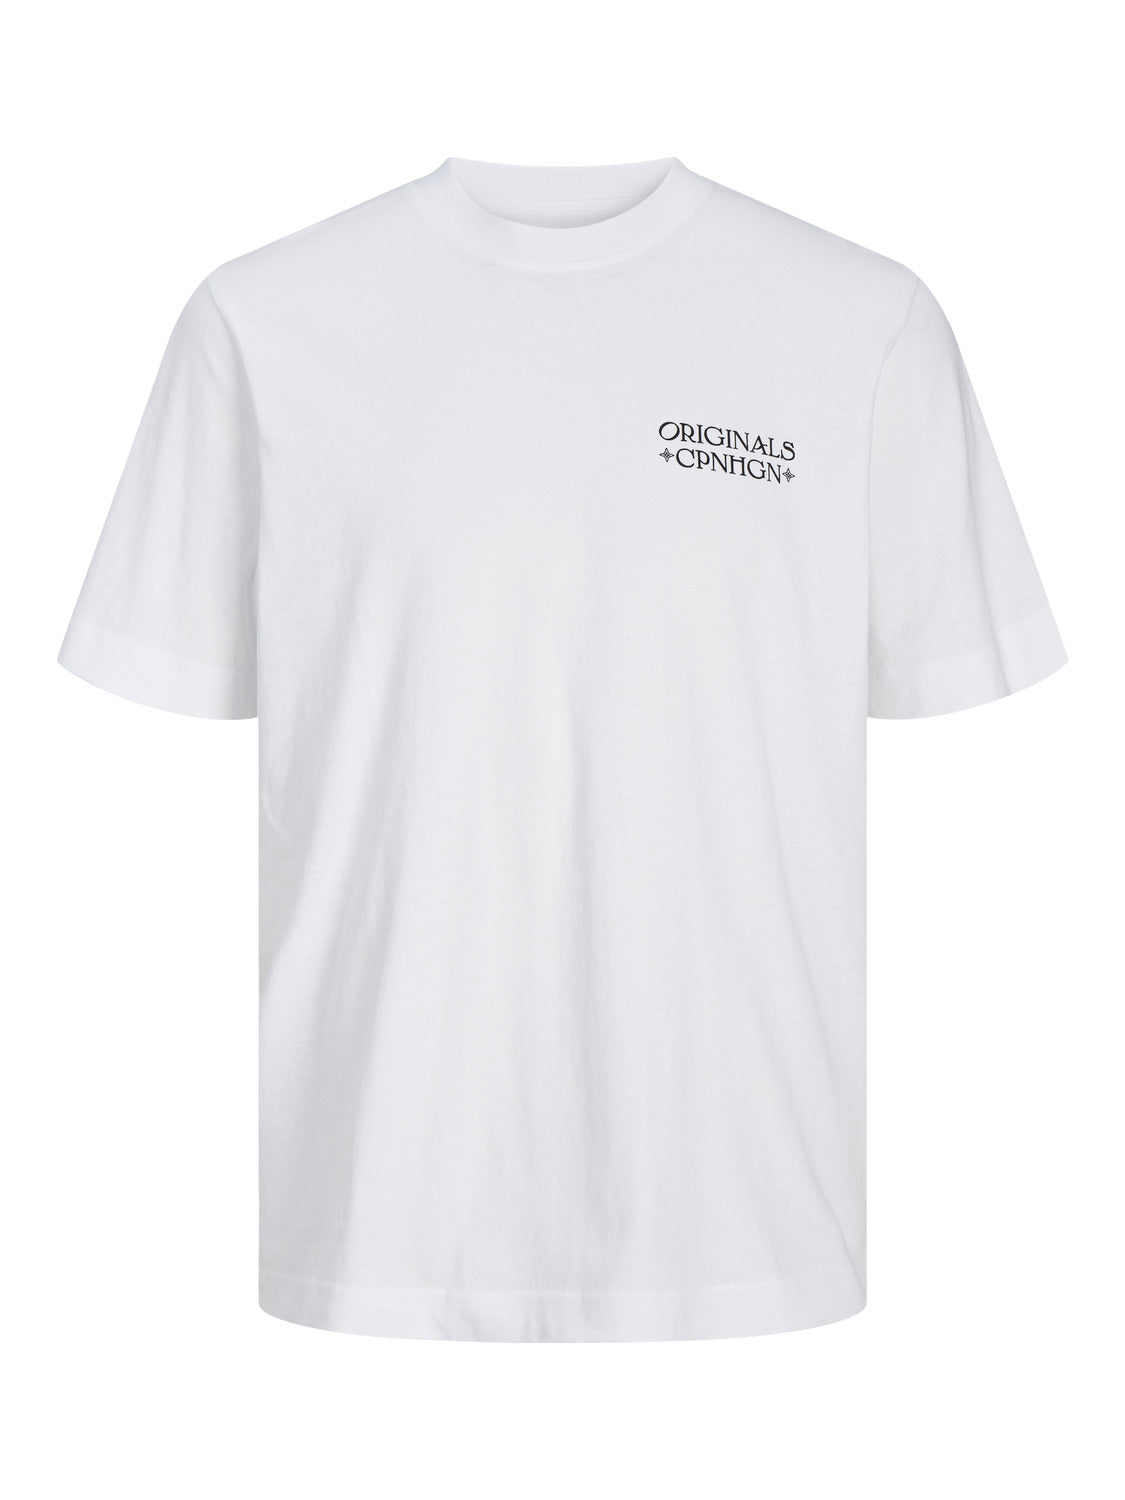 JORGRACIA T-Shirt - Bright White